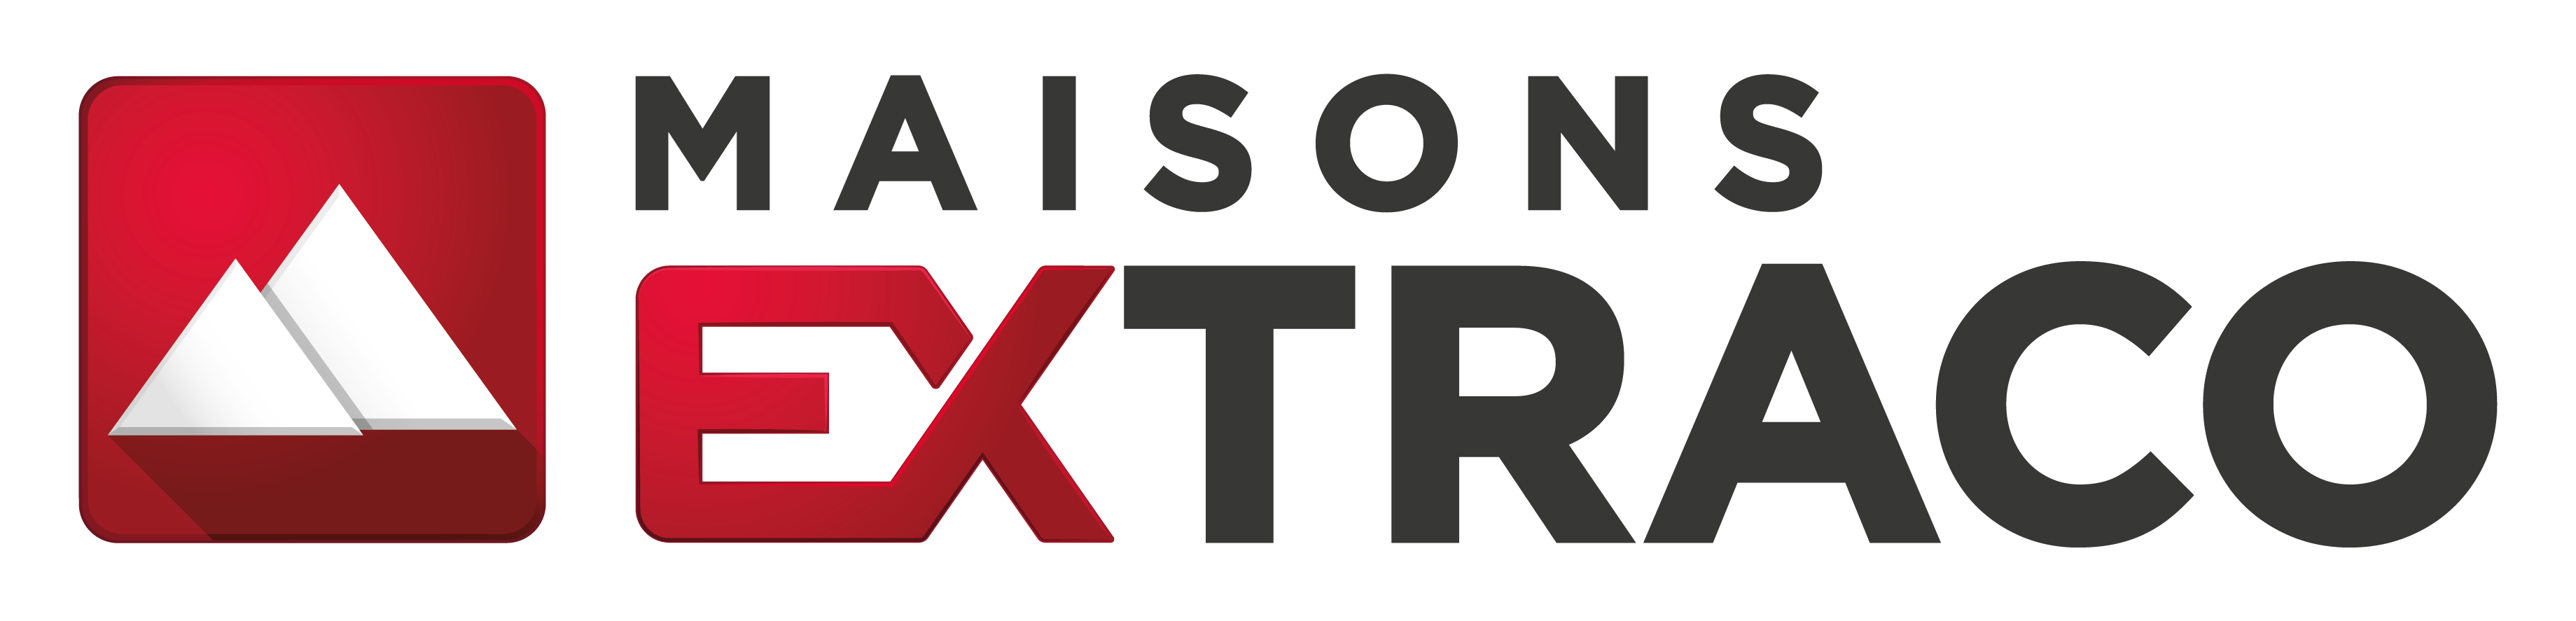 Logo-Maisons-Extraco-rouge-gris